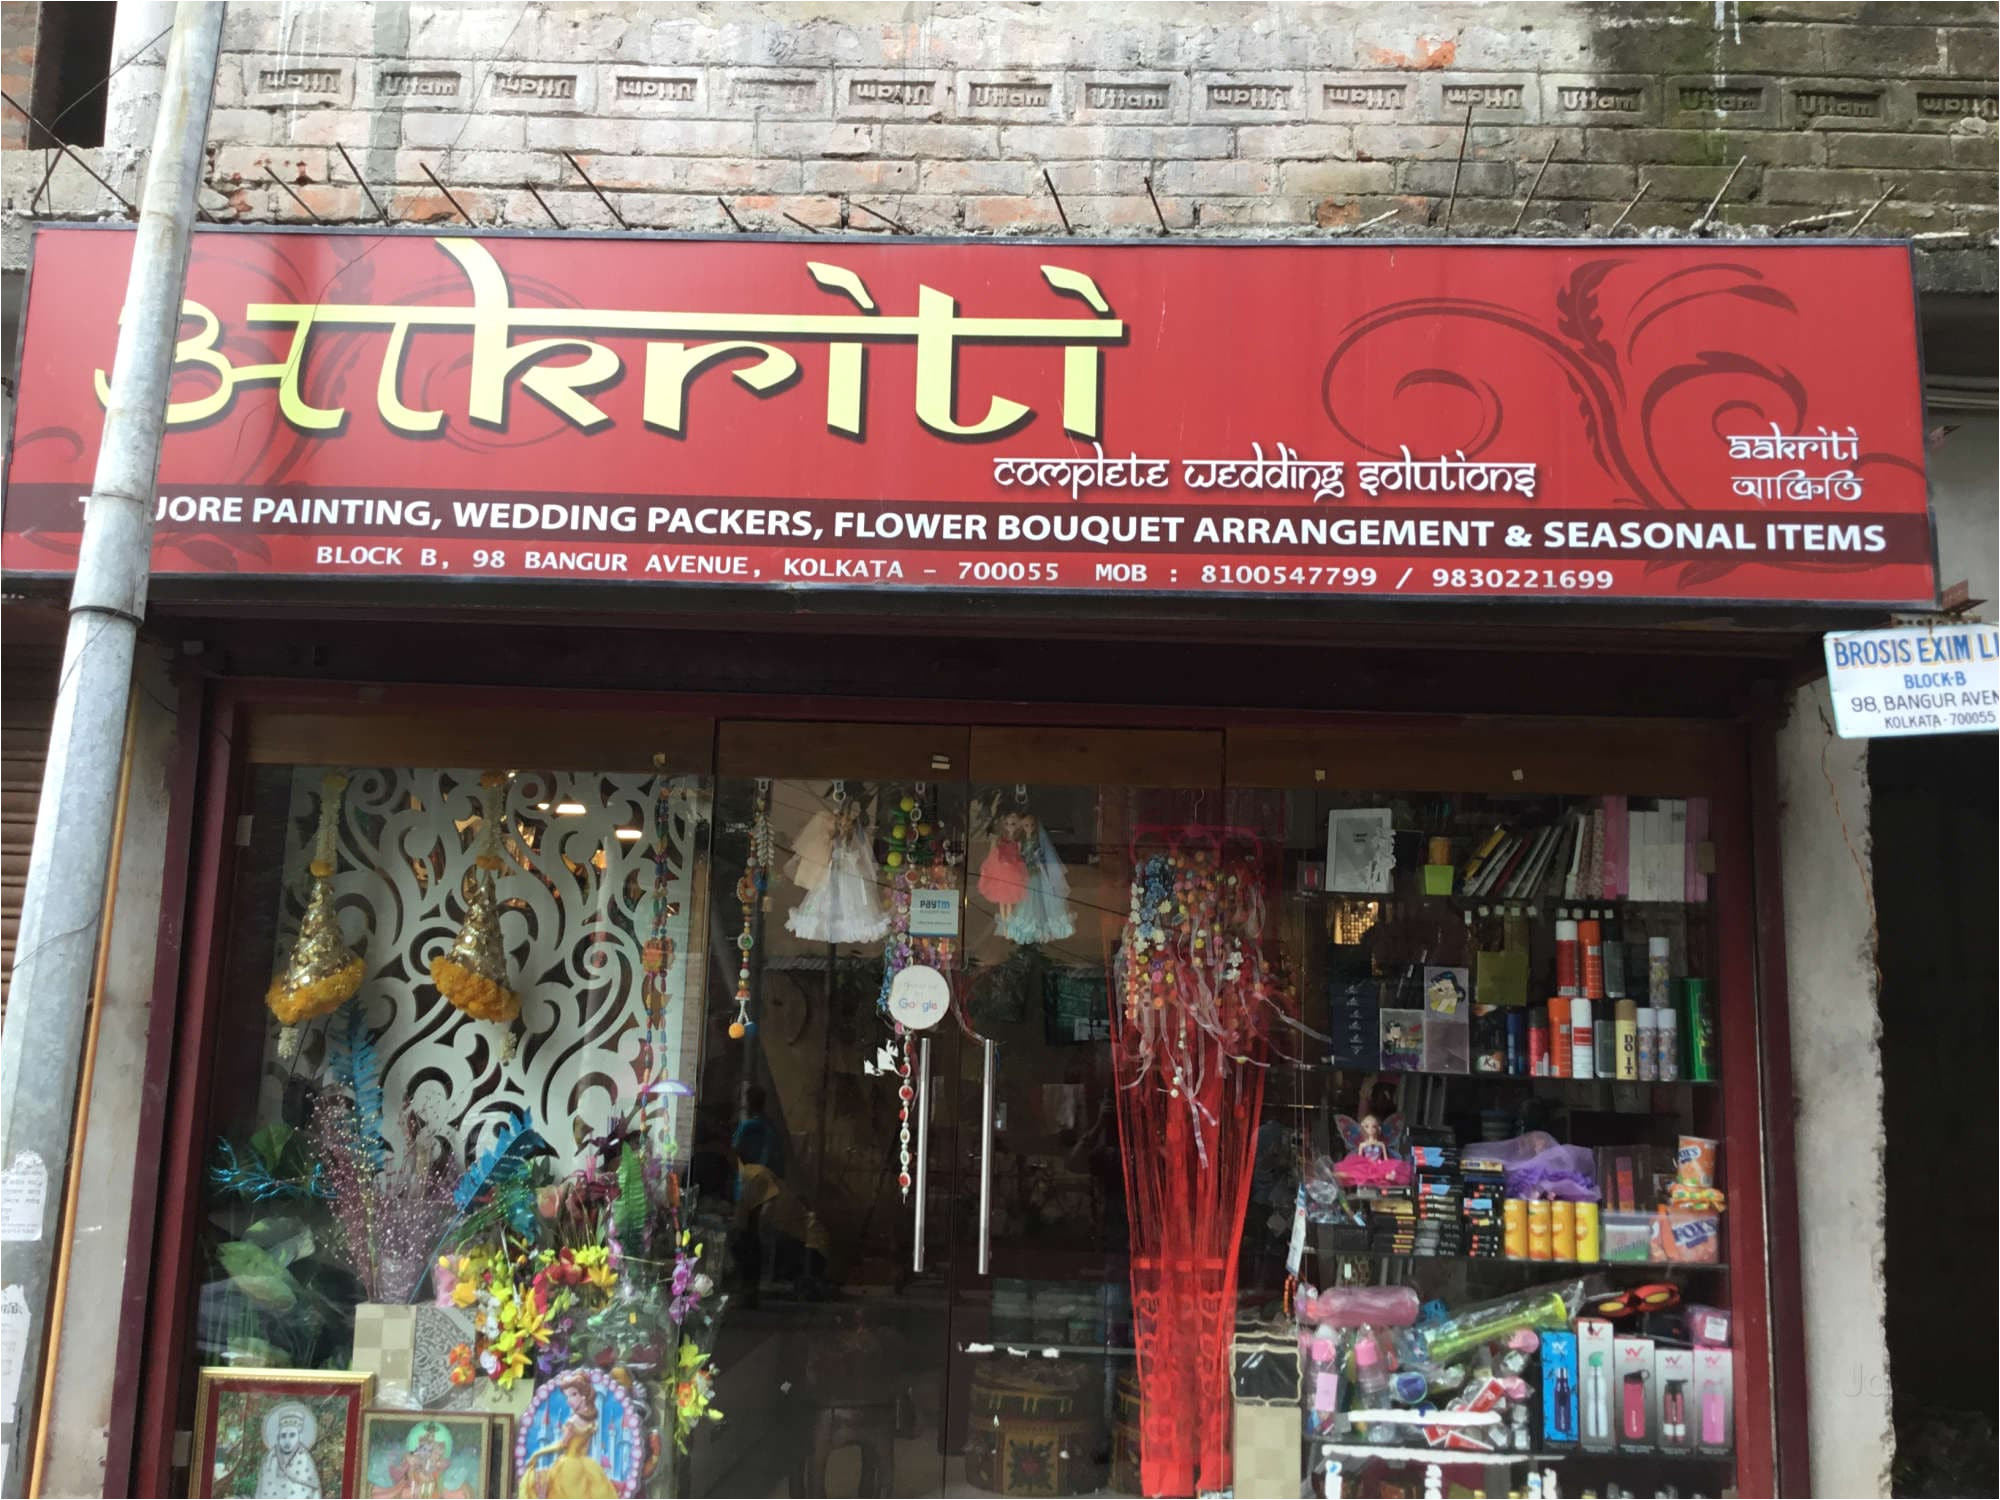 aakriti bangur avenue kolkata gift shops tf15a jpg